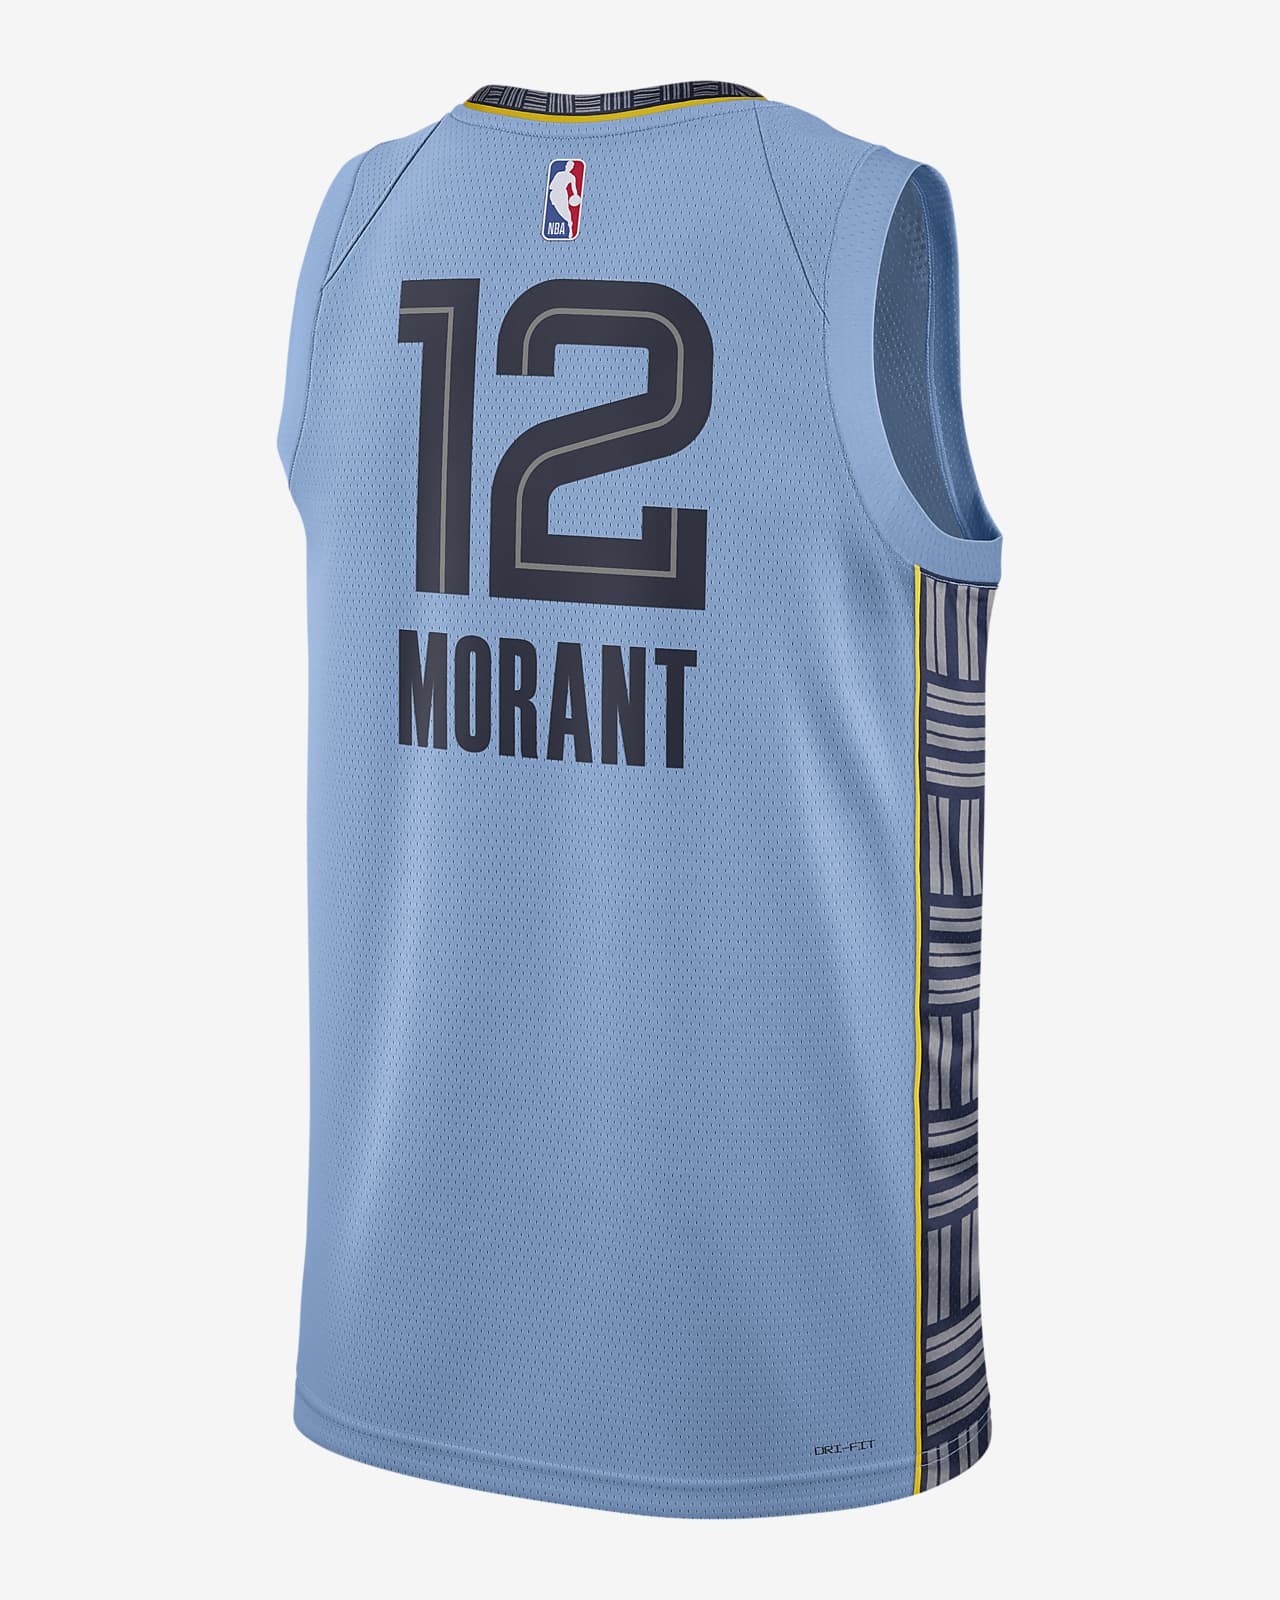 2022-23 Memphis Grizzlies Morant #12 Jordan Swingman Alternate Jersey (XL)